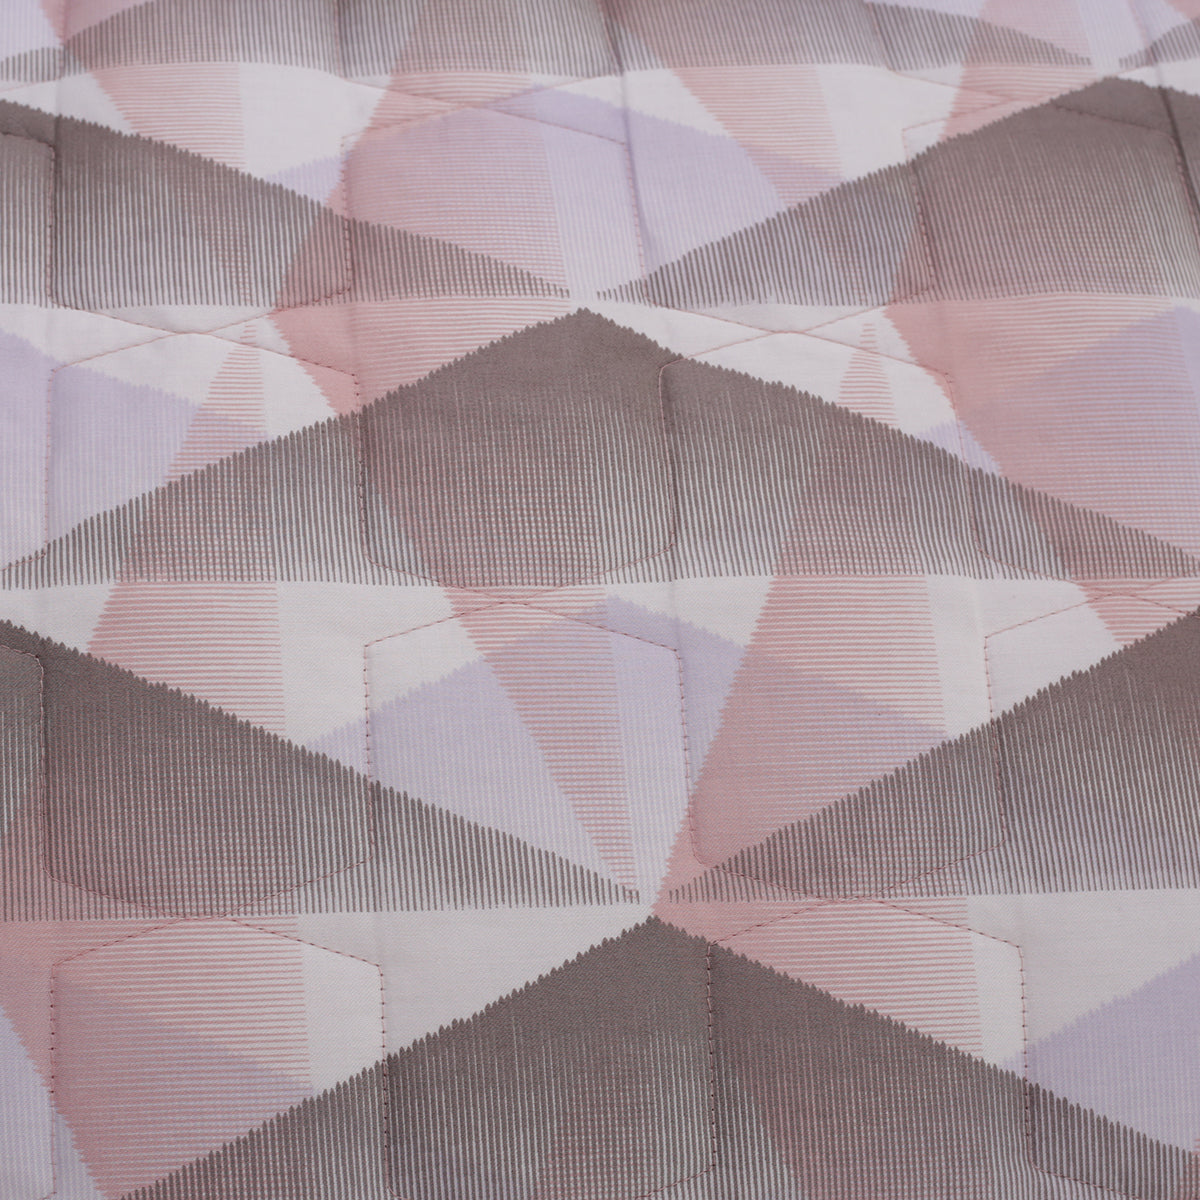 6PC Quilt/Quilted Bed Cover Set Art Nouveau Emerson Pink